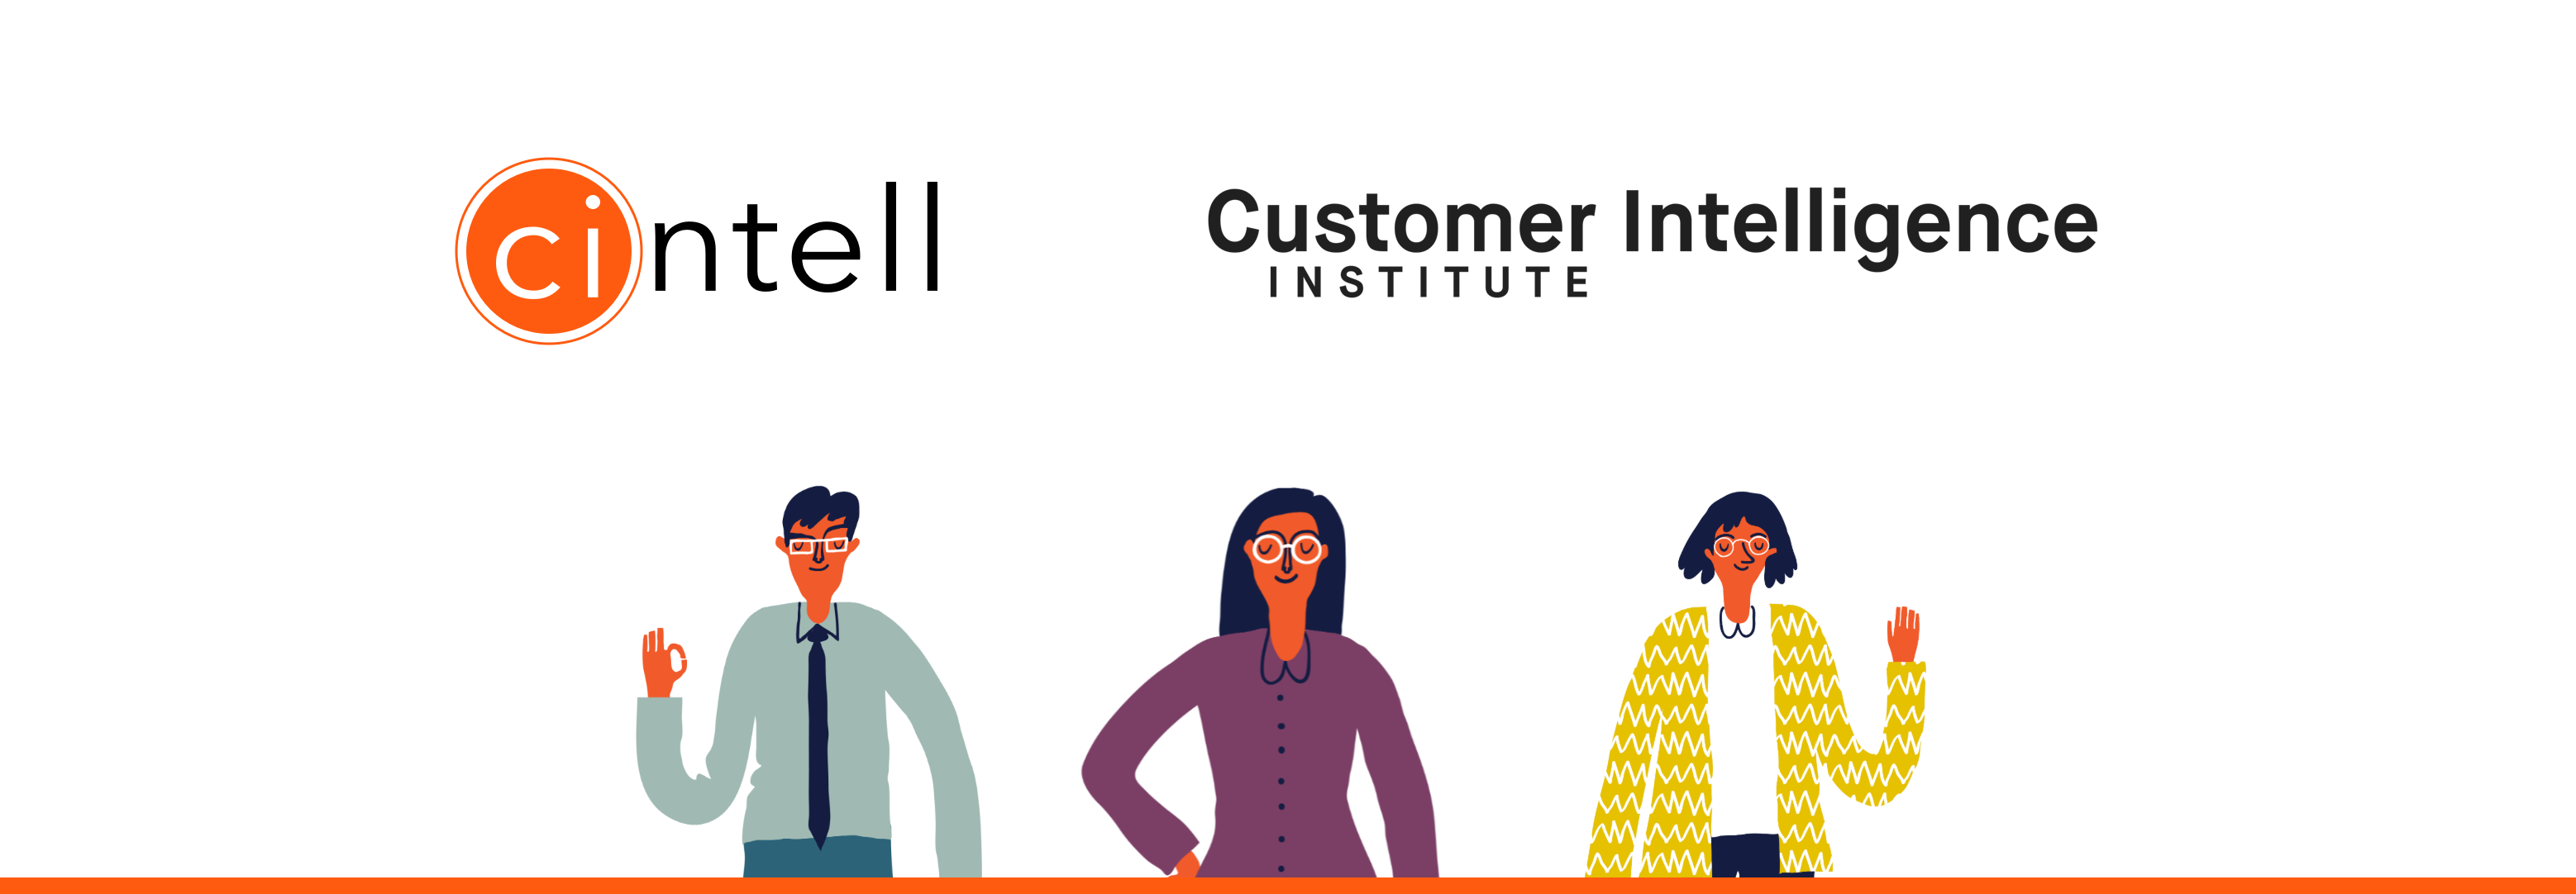 cintell-customer-intelligence-institure-partnership